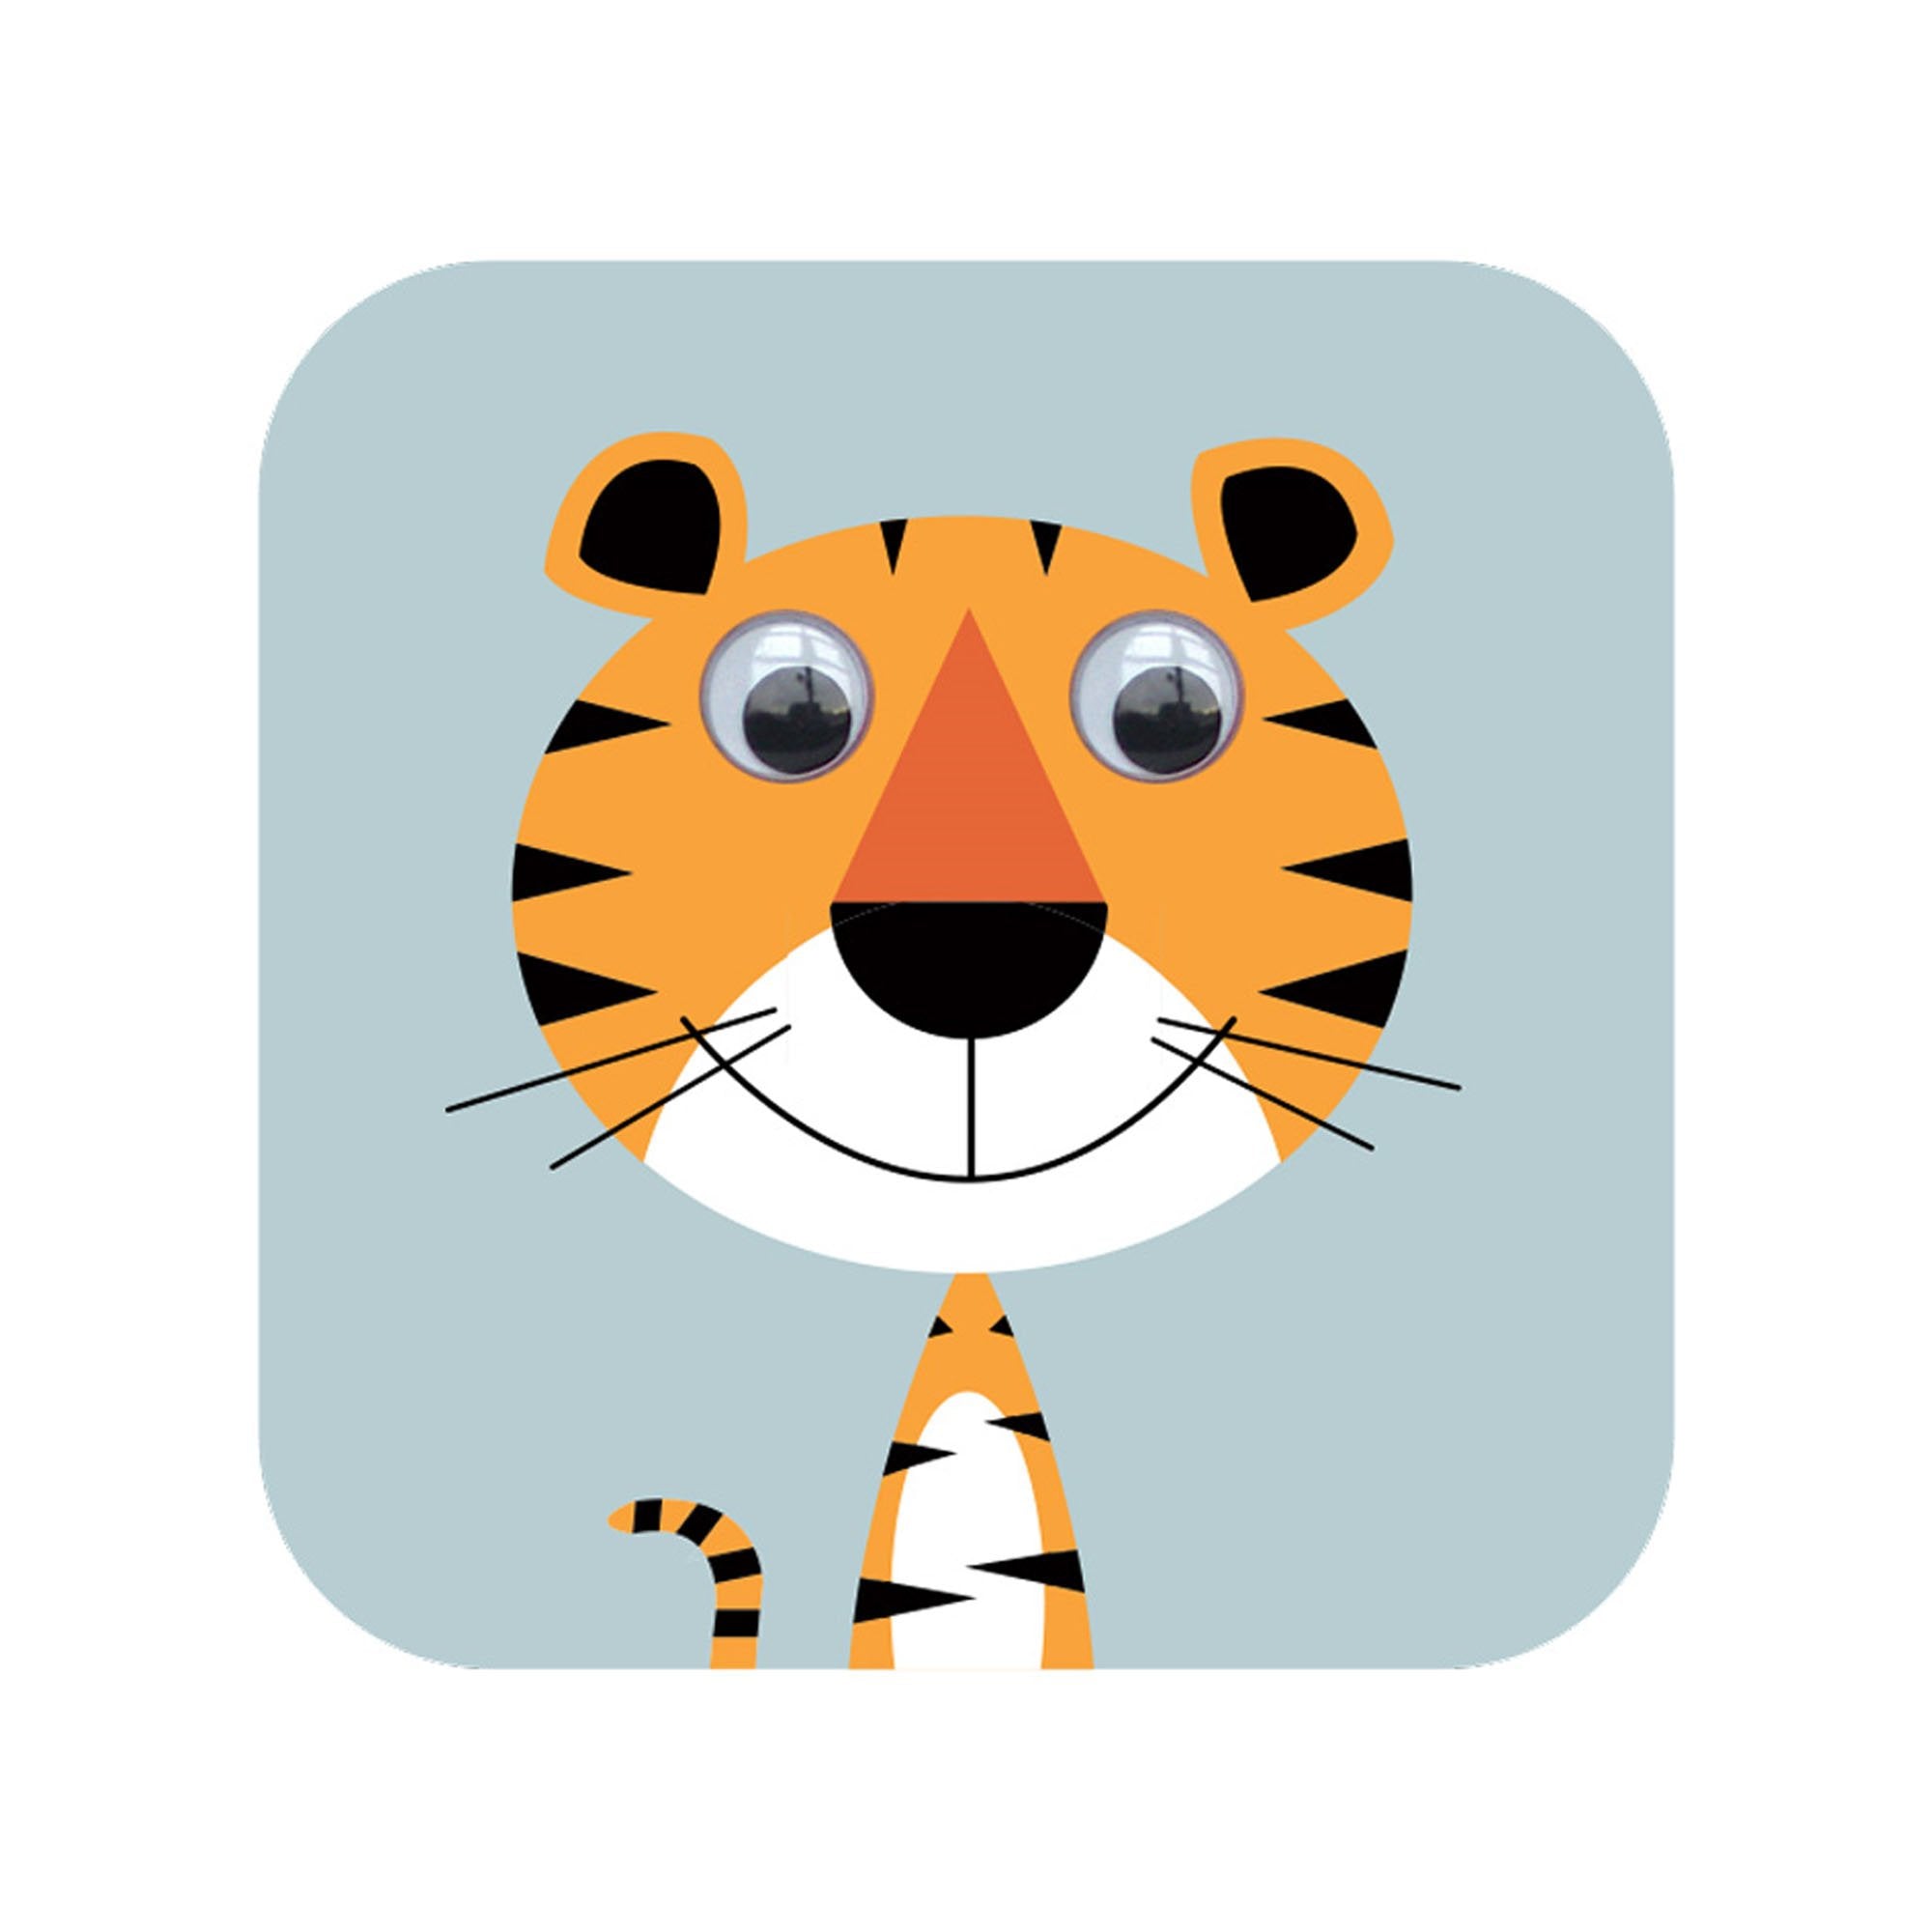 Tiger Googly Eyed Greetings Card